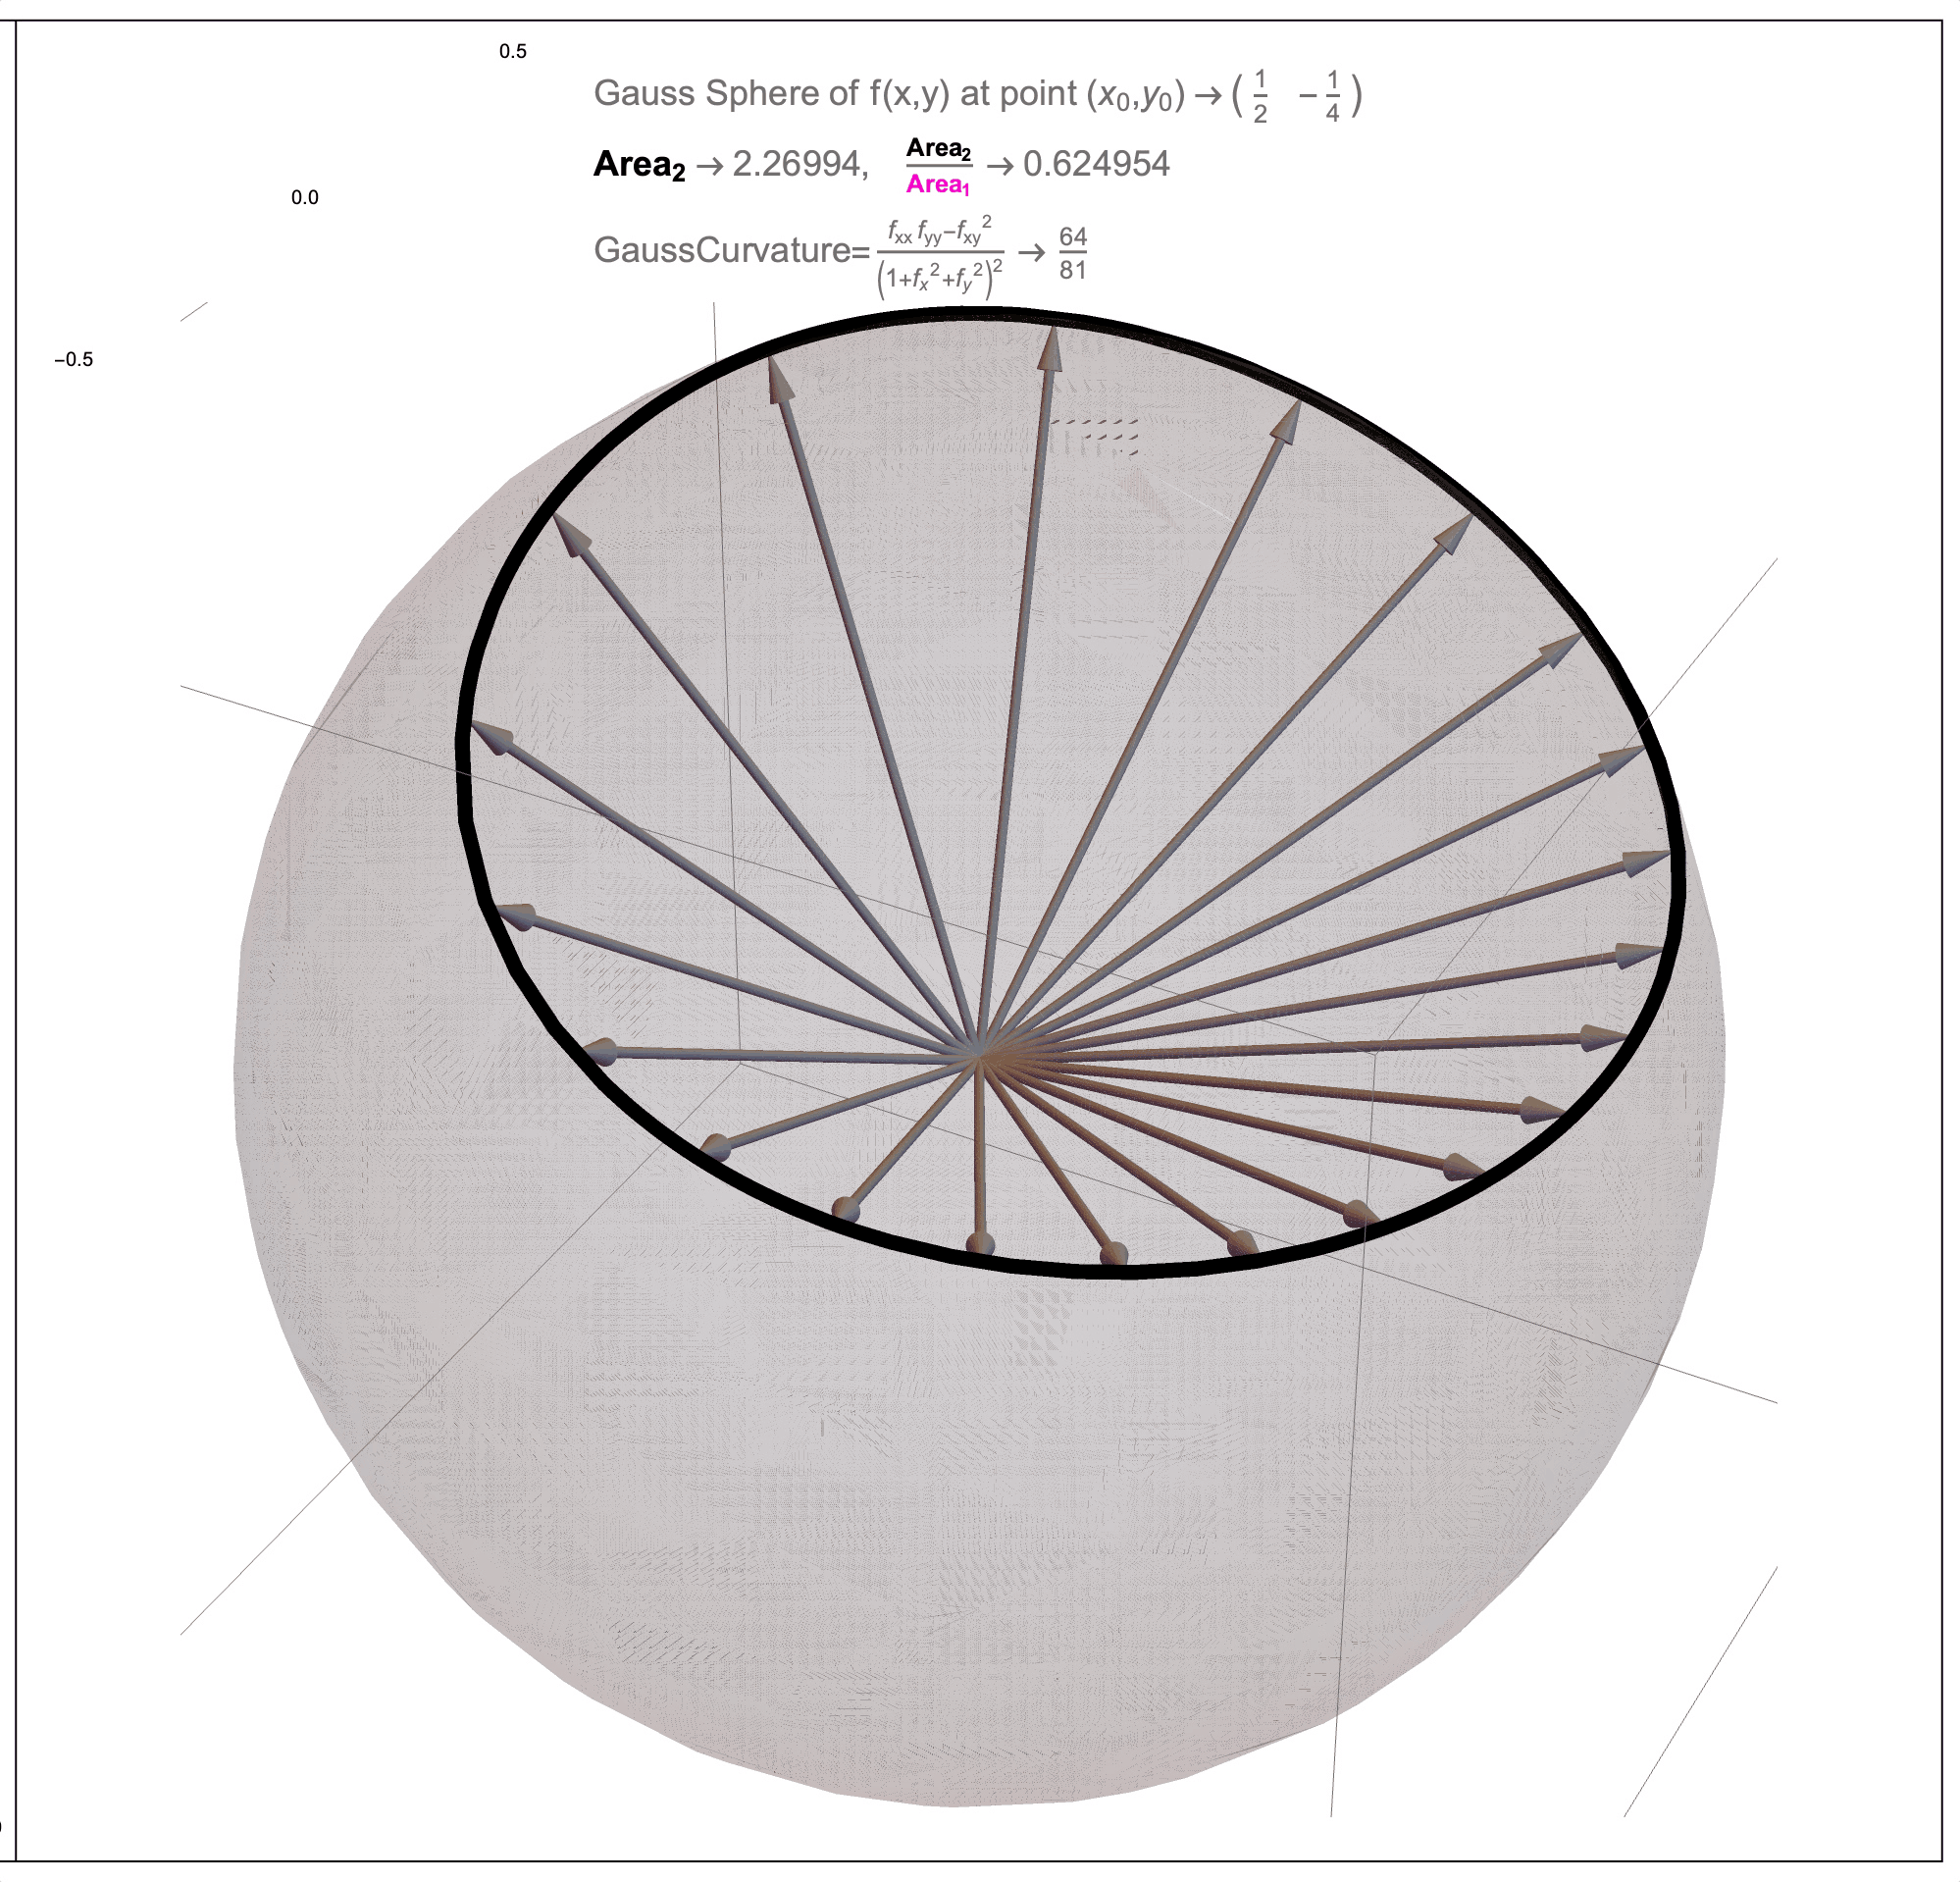 Gauss Curvature Illustration: A Ratio of Areas